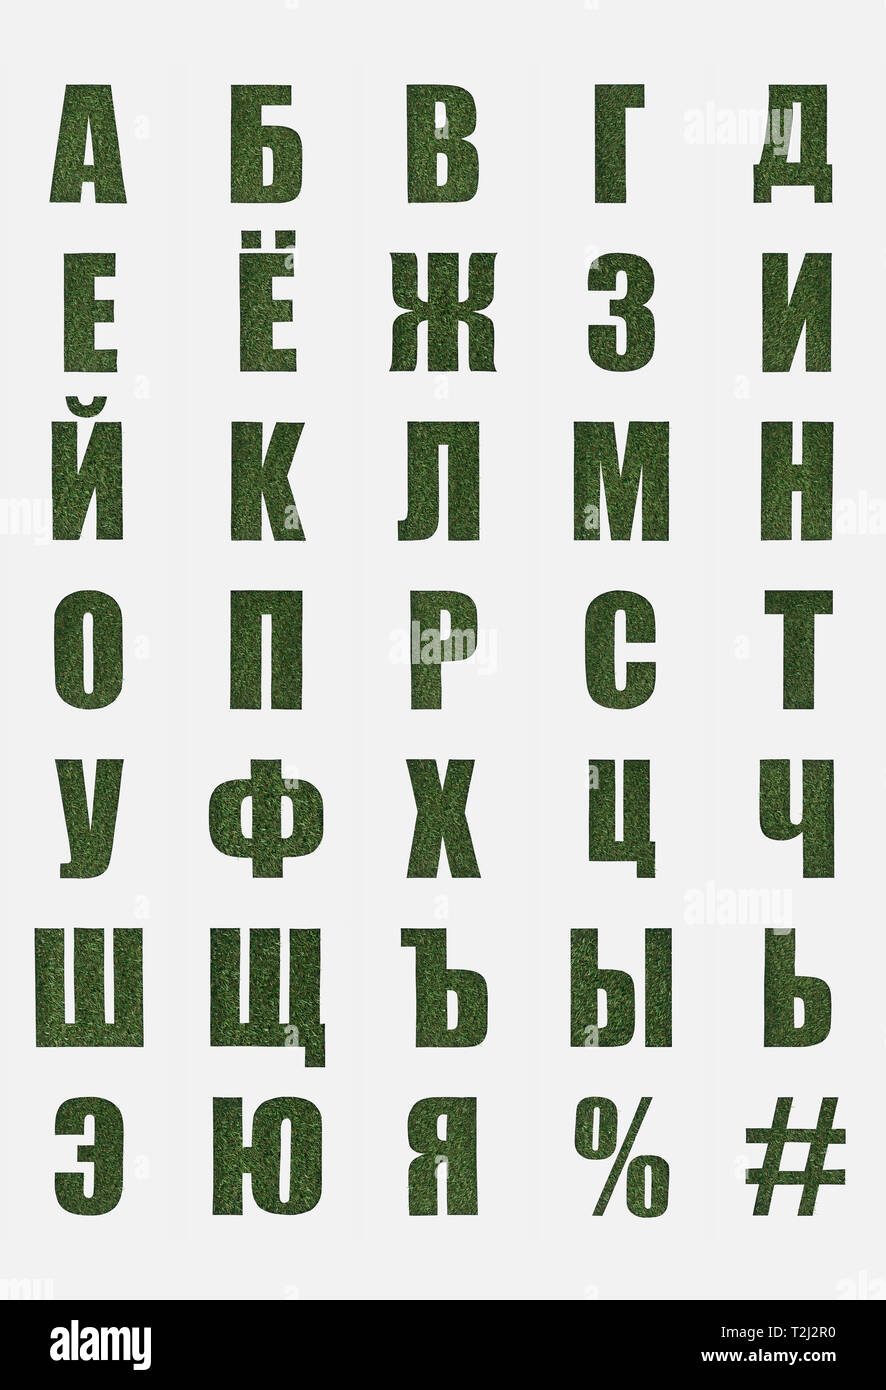 my Ukrainian alphabet lore (E-И)